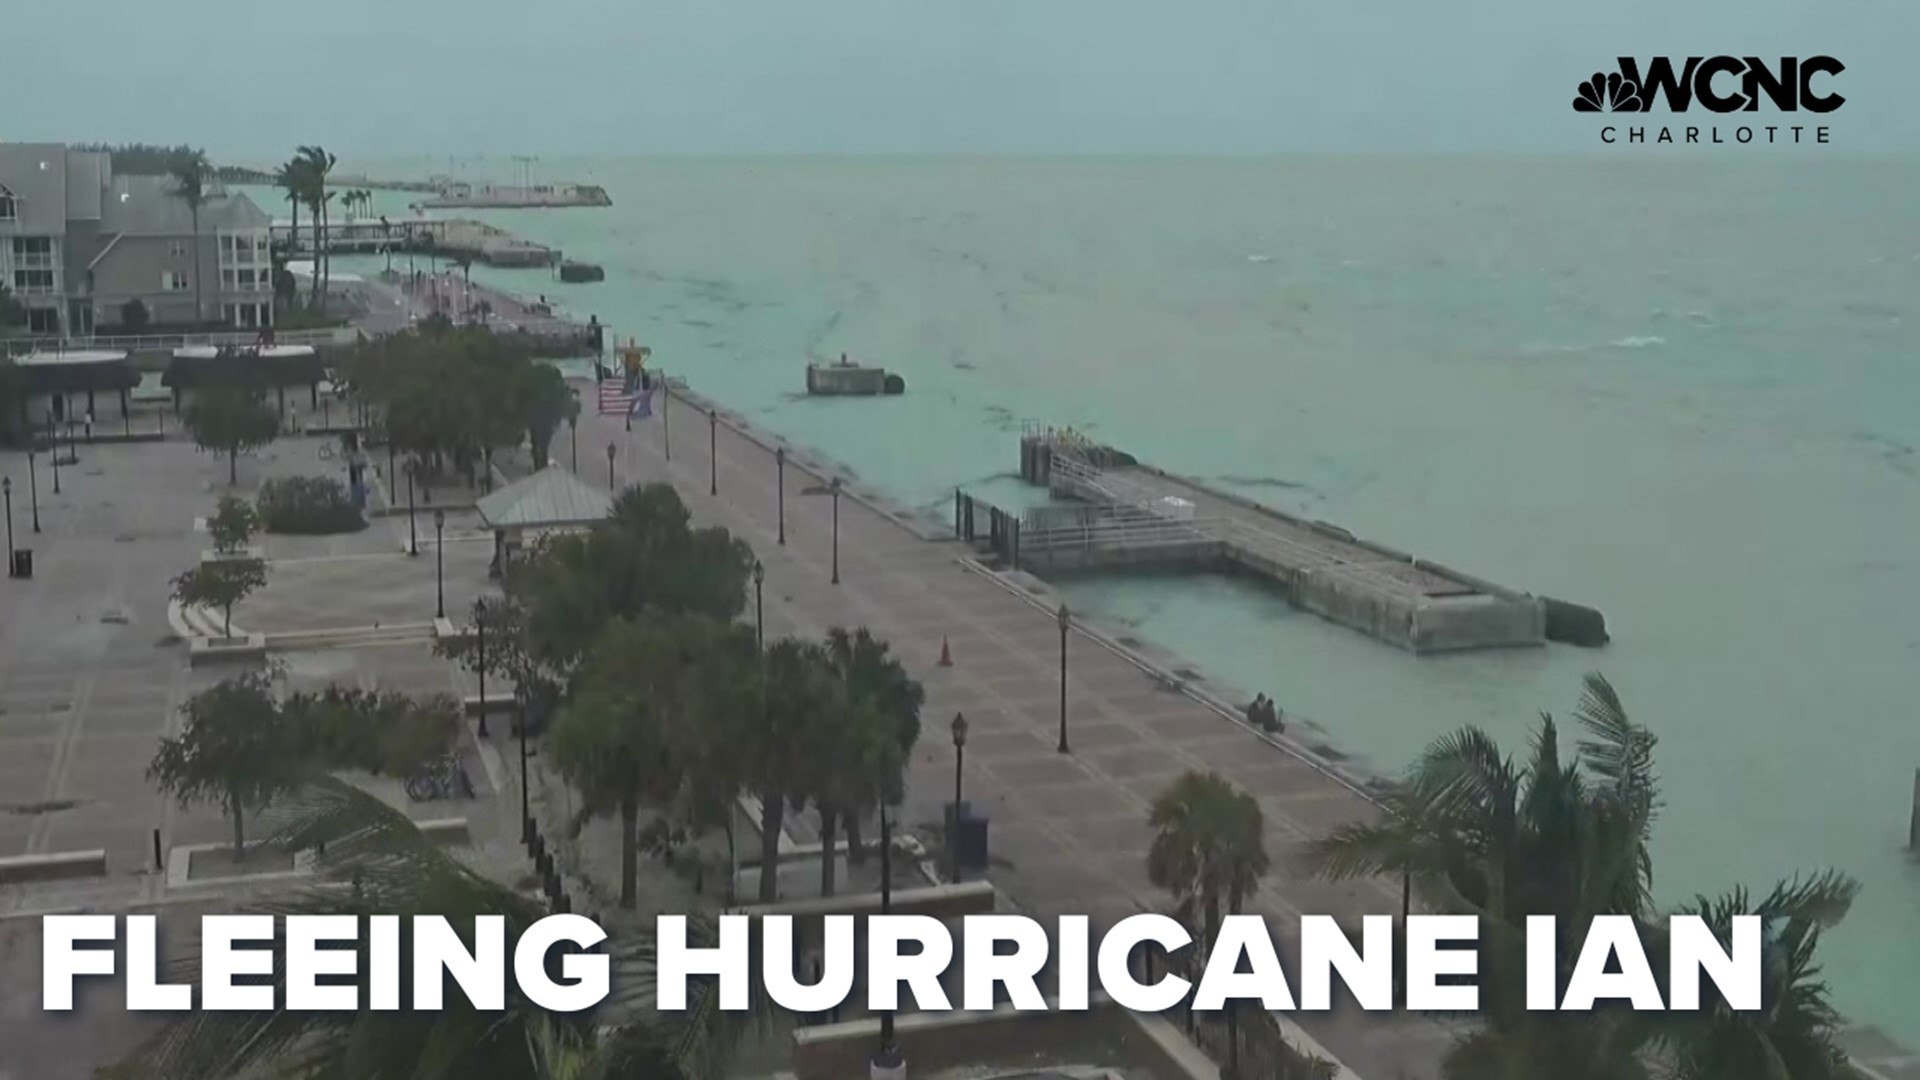 As Hurricane Ian churns over Florida, the Carolinas are preparing for impacts